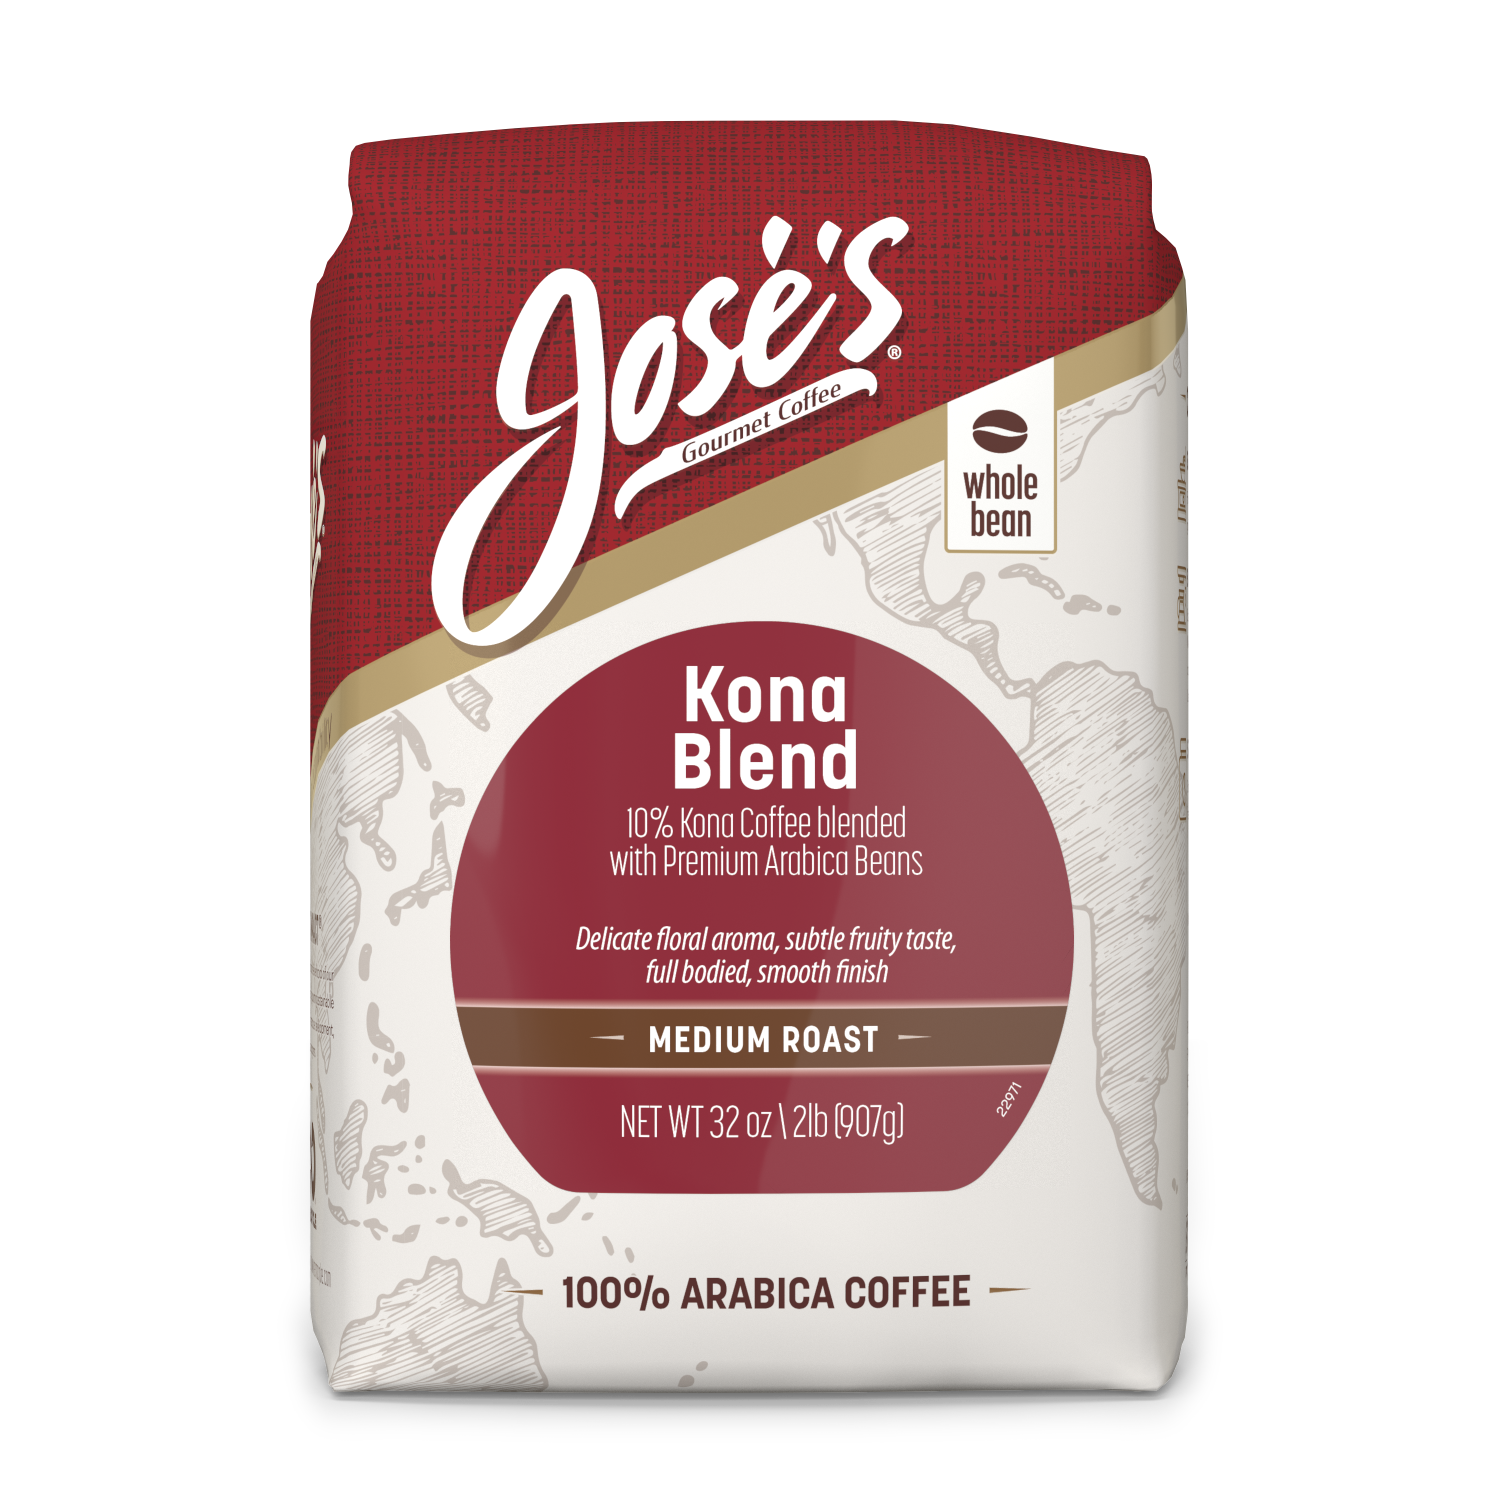 Joses Gourmet Coffee Kona Blend